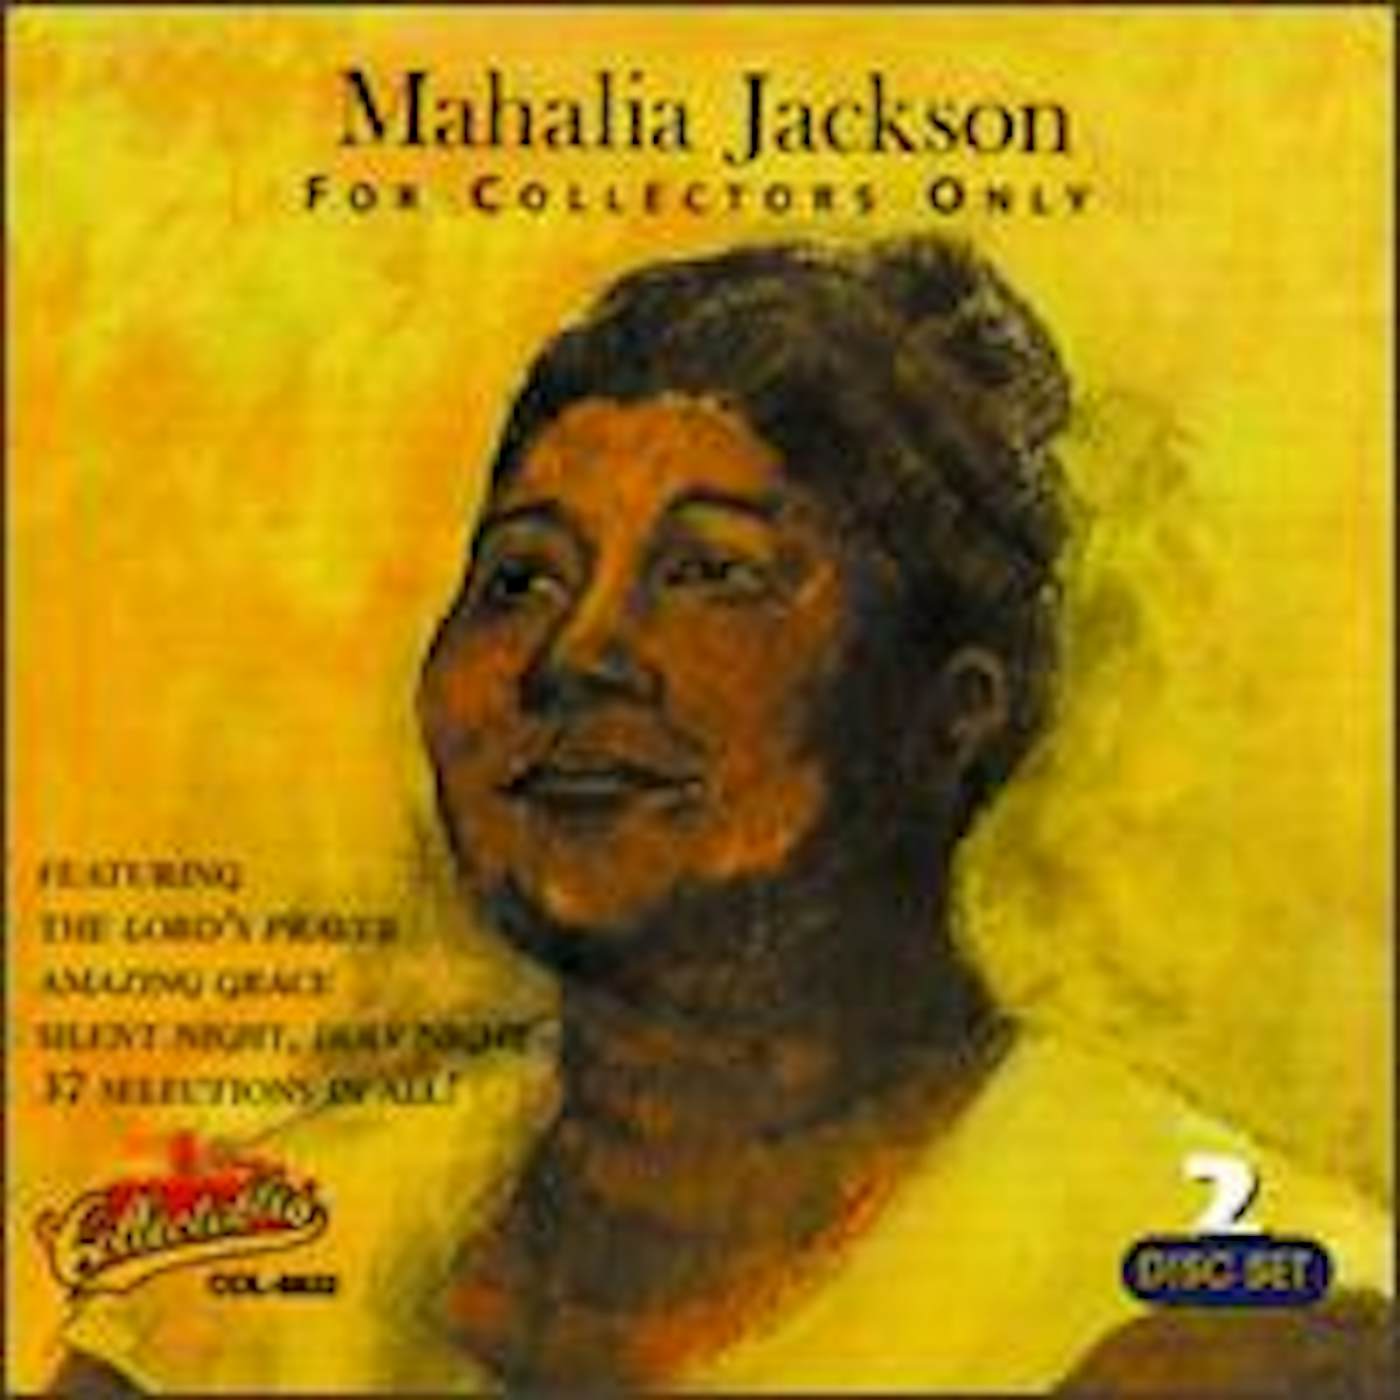 Mahalia Jackson APOLLO YEARS CD